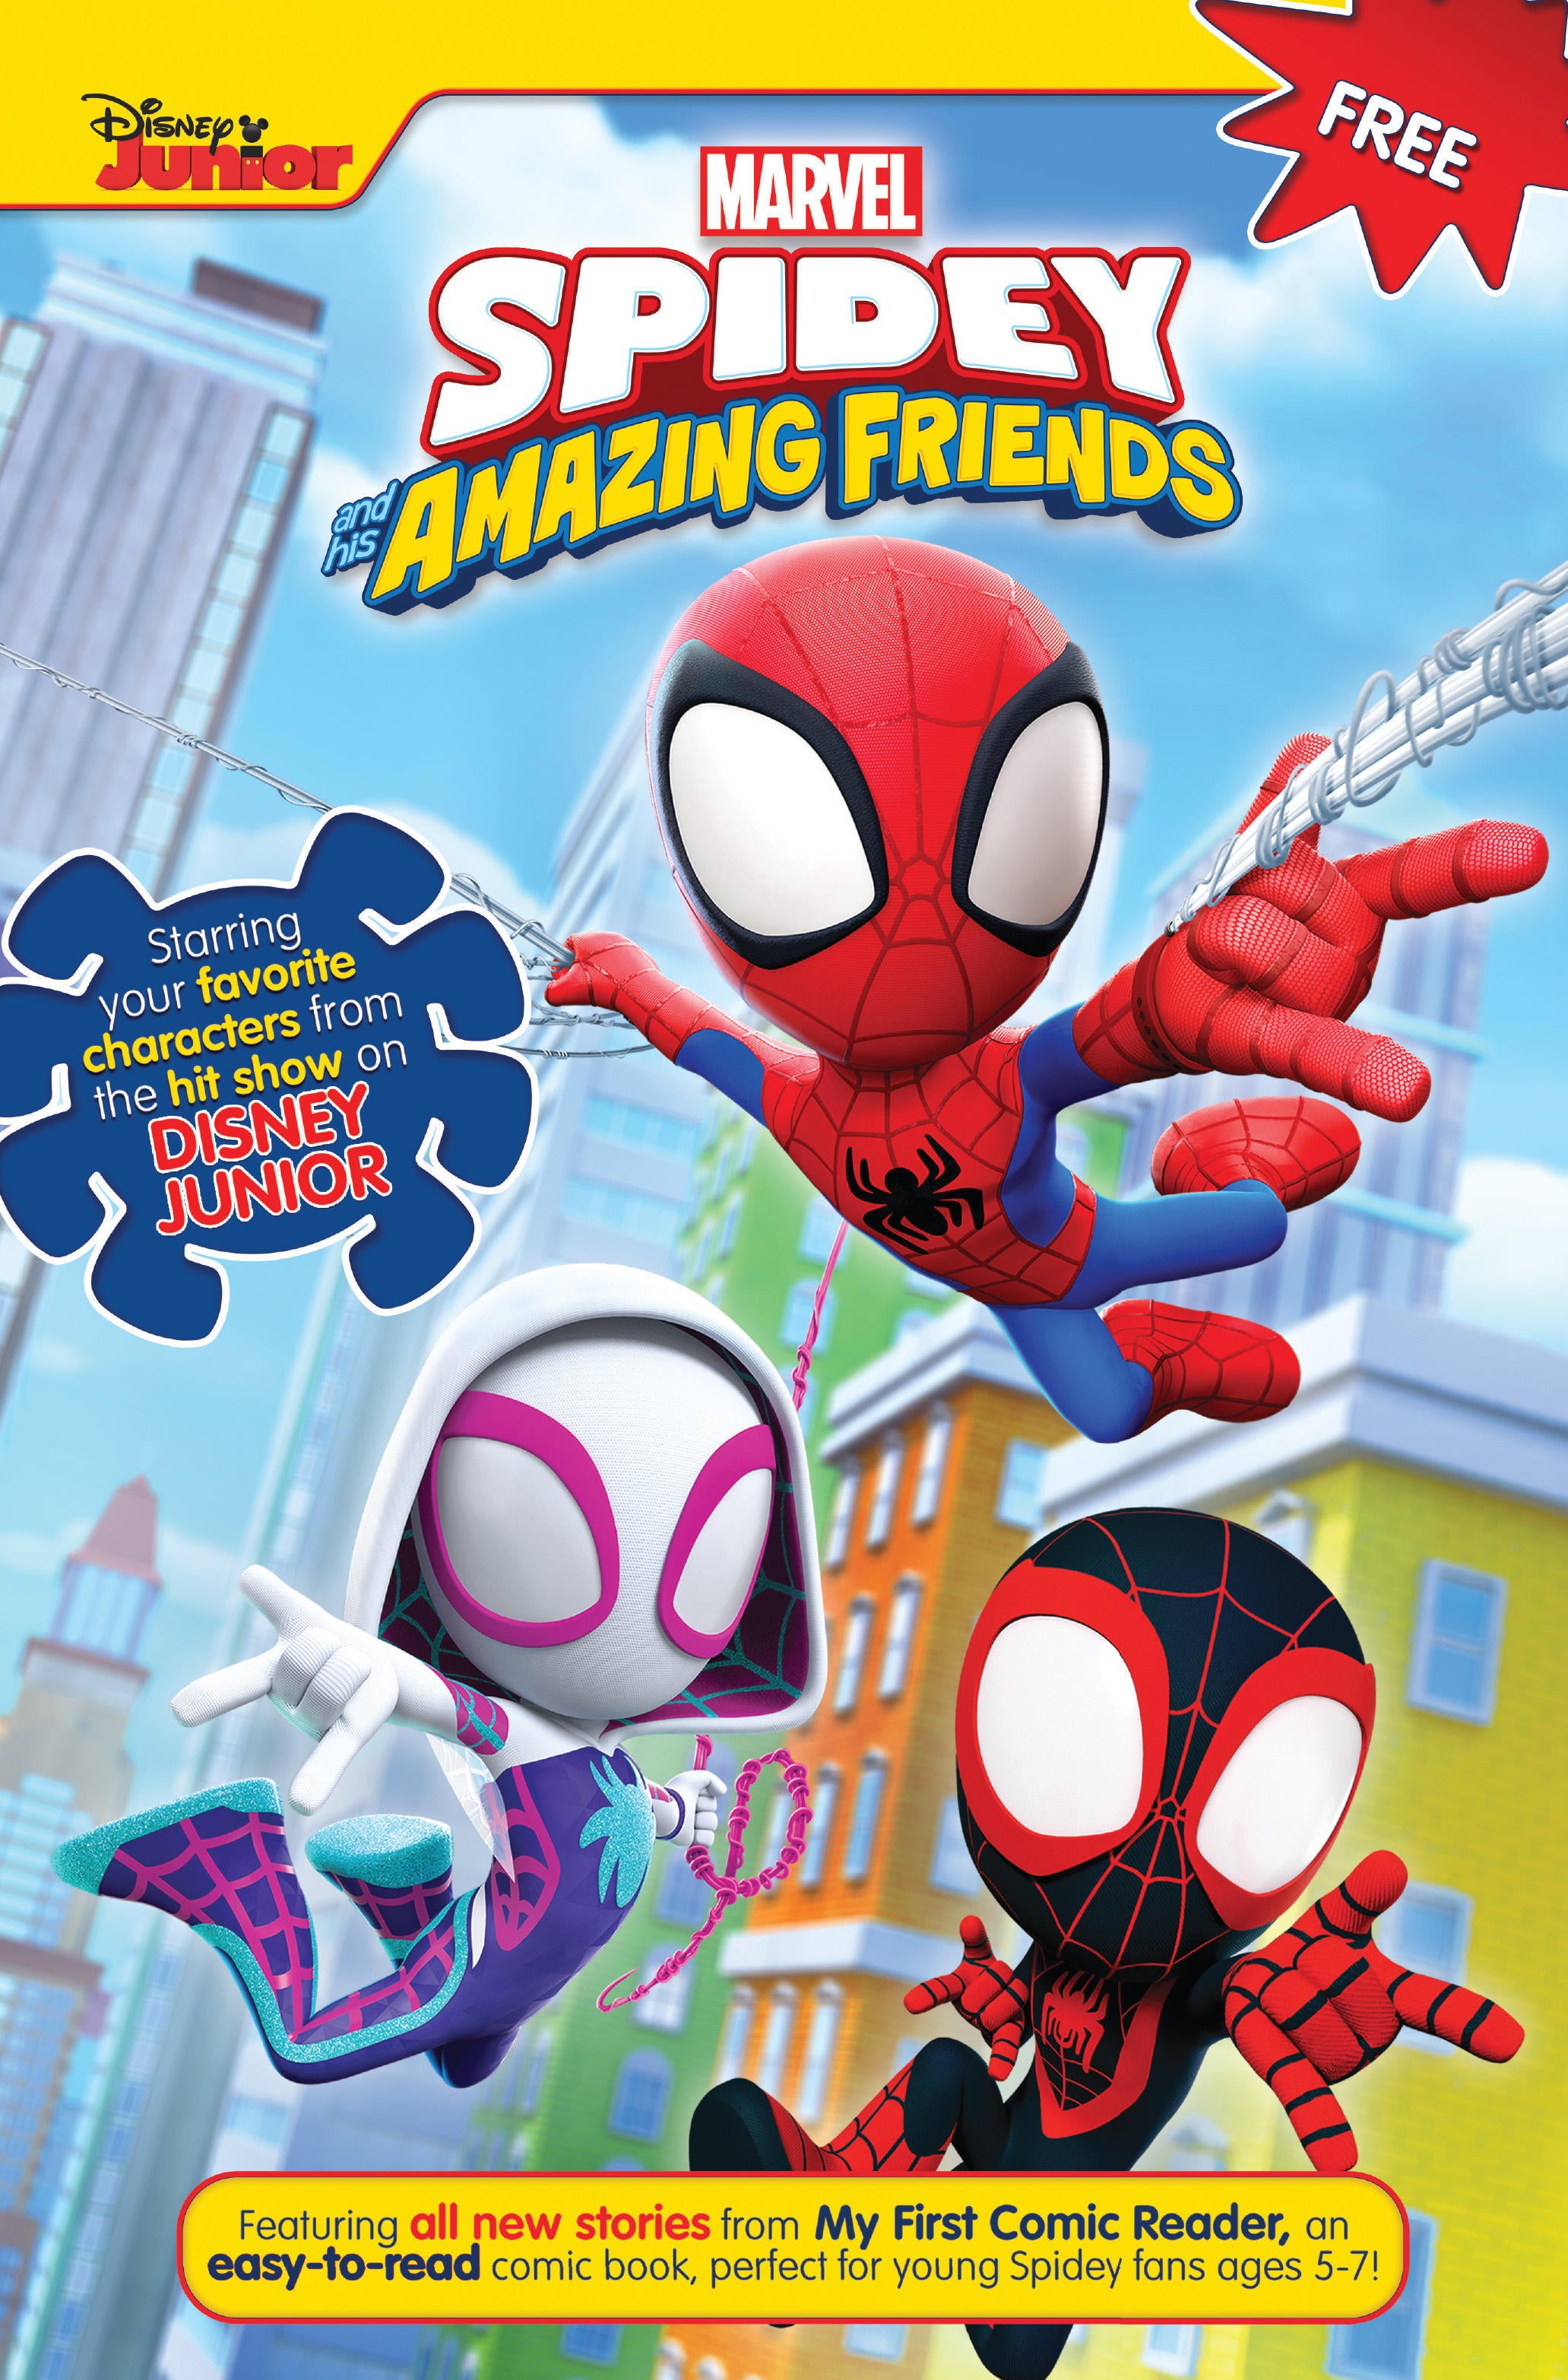 Spider-Man - Spider-Man and his Amazing Friends cartoon - Profile 